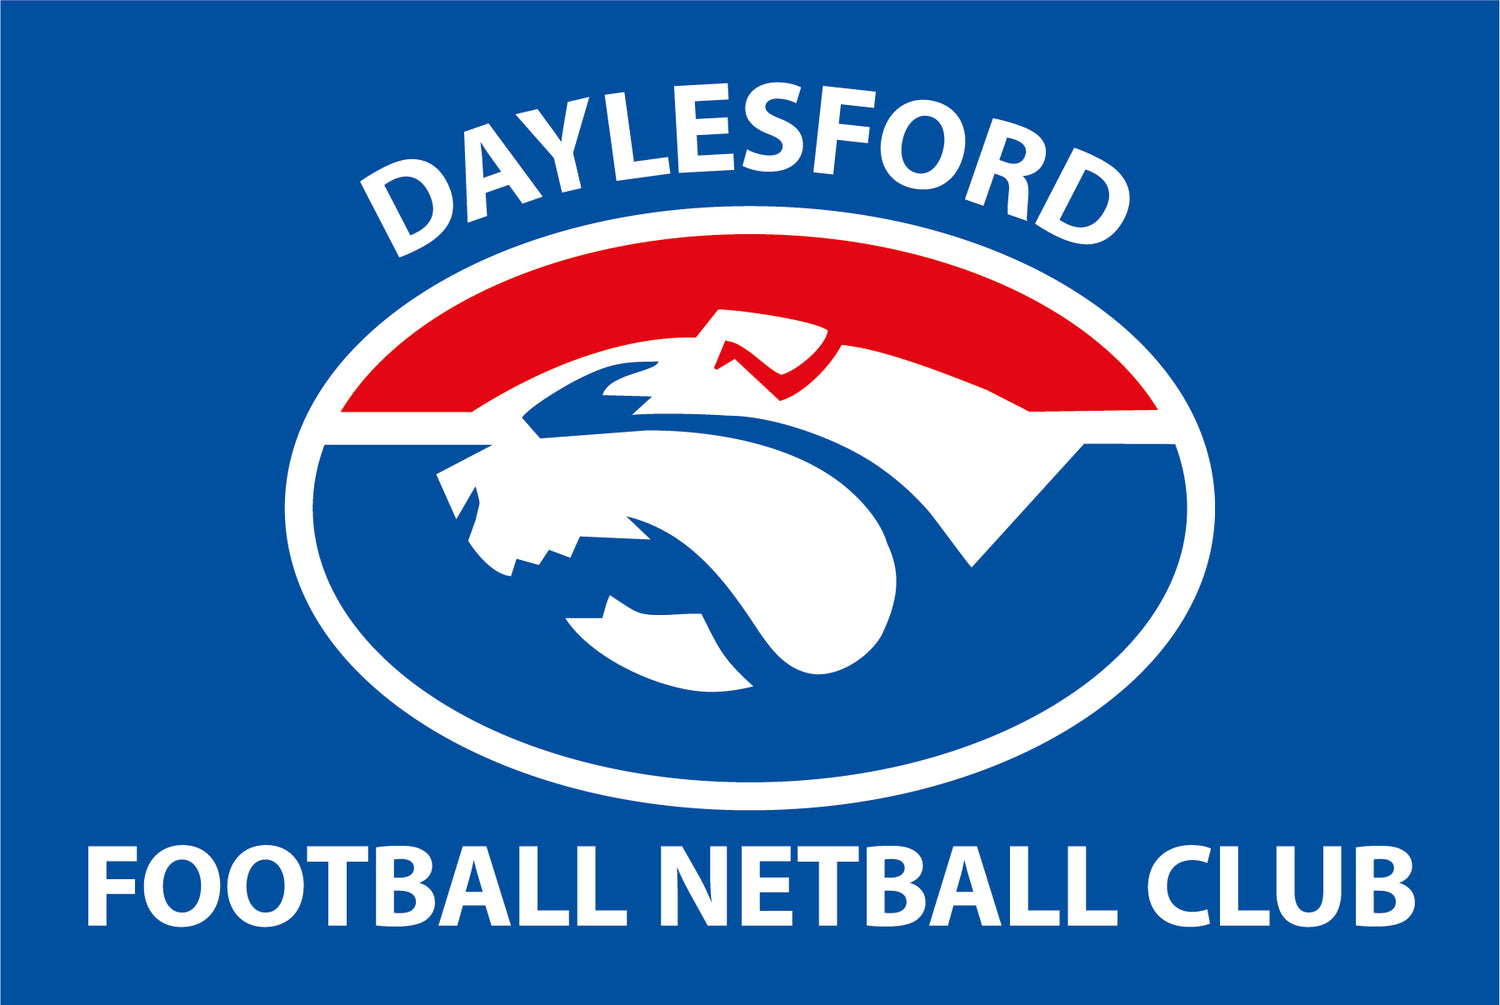 Daylesford Football and Netball Club